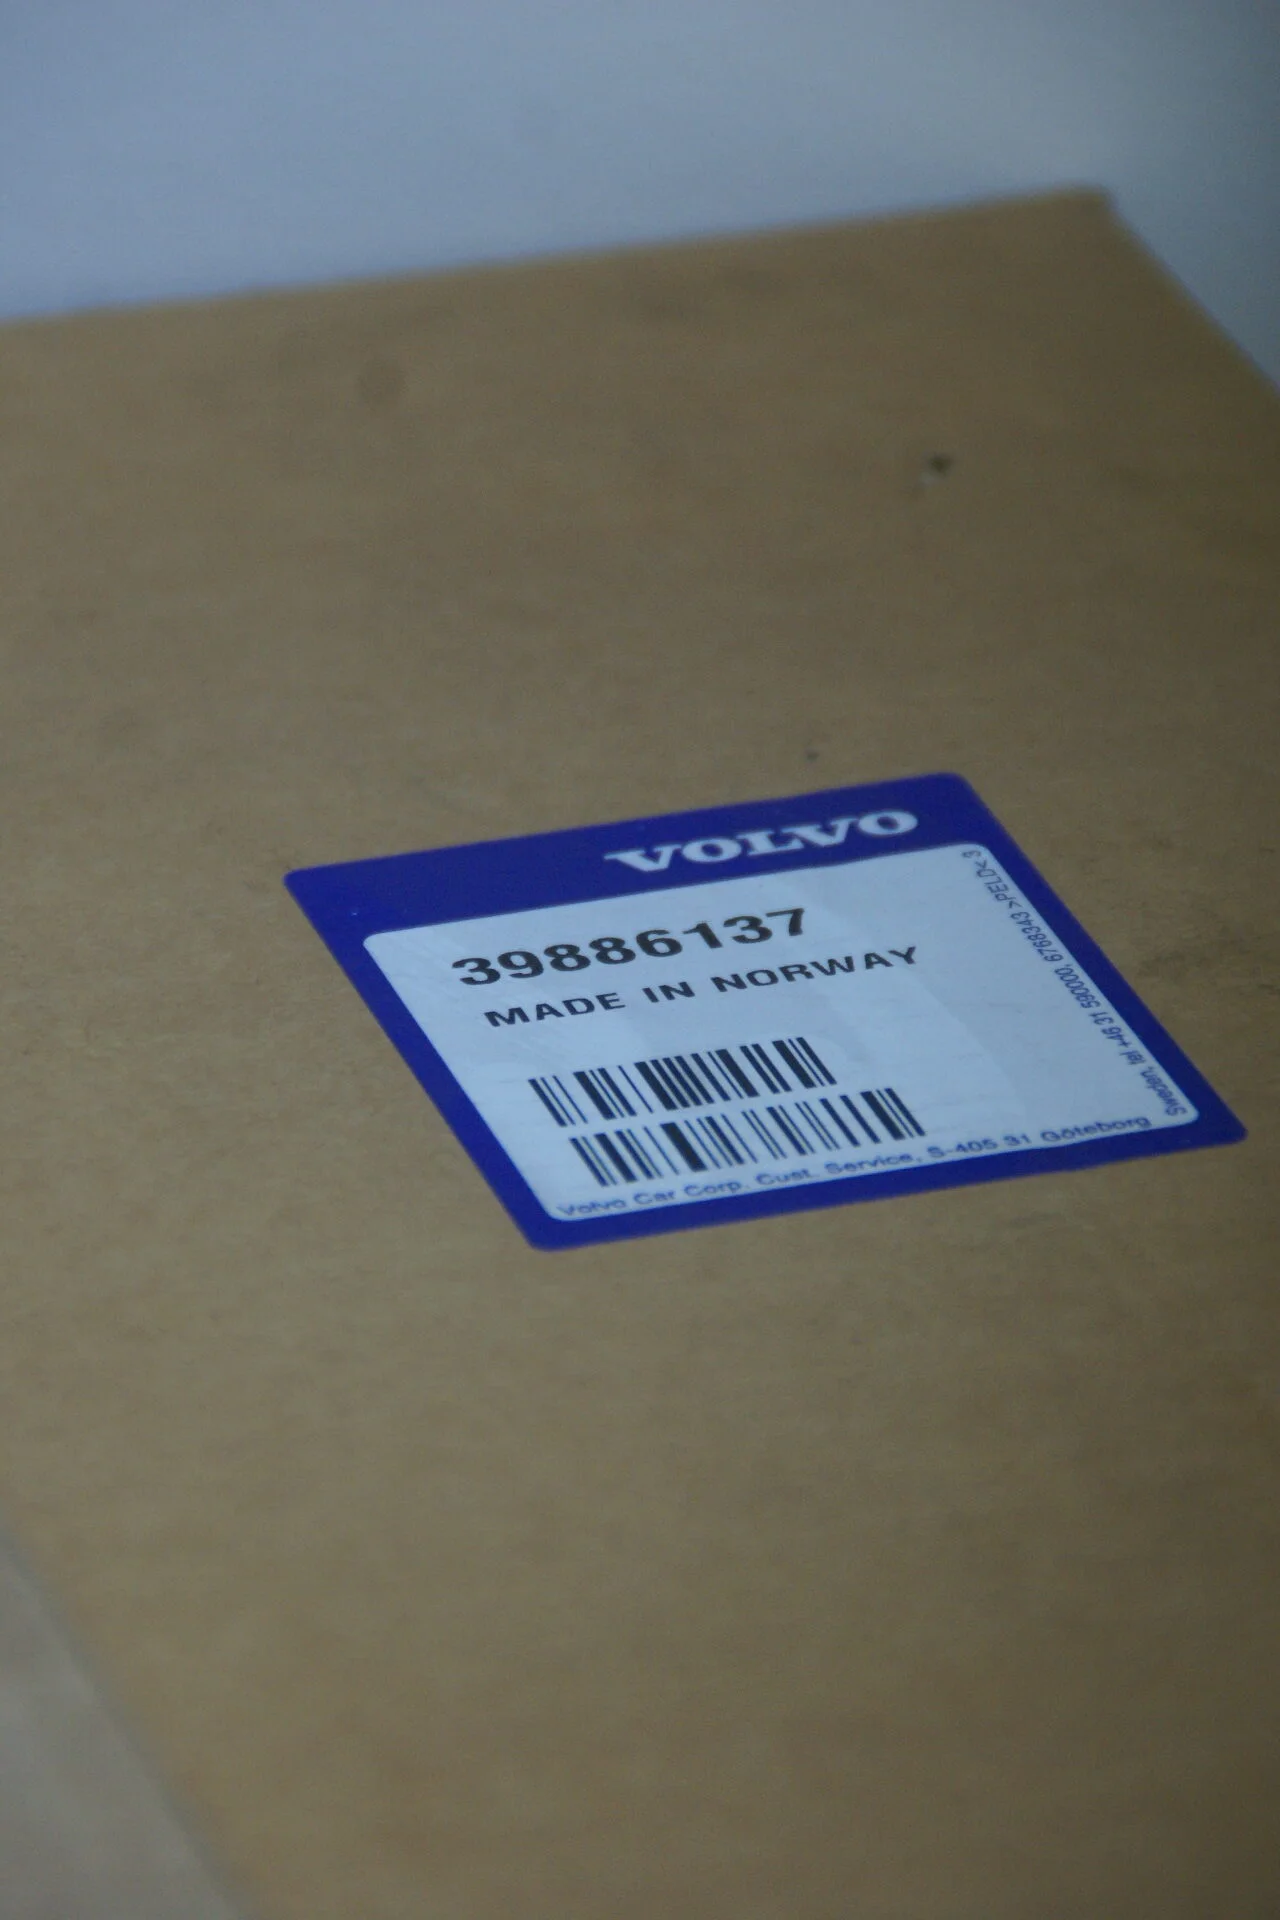 DSC01733 130 splinternieuw in doos spoiler origineel Volvo V50 artnr. 39886137 NOS-24db1691